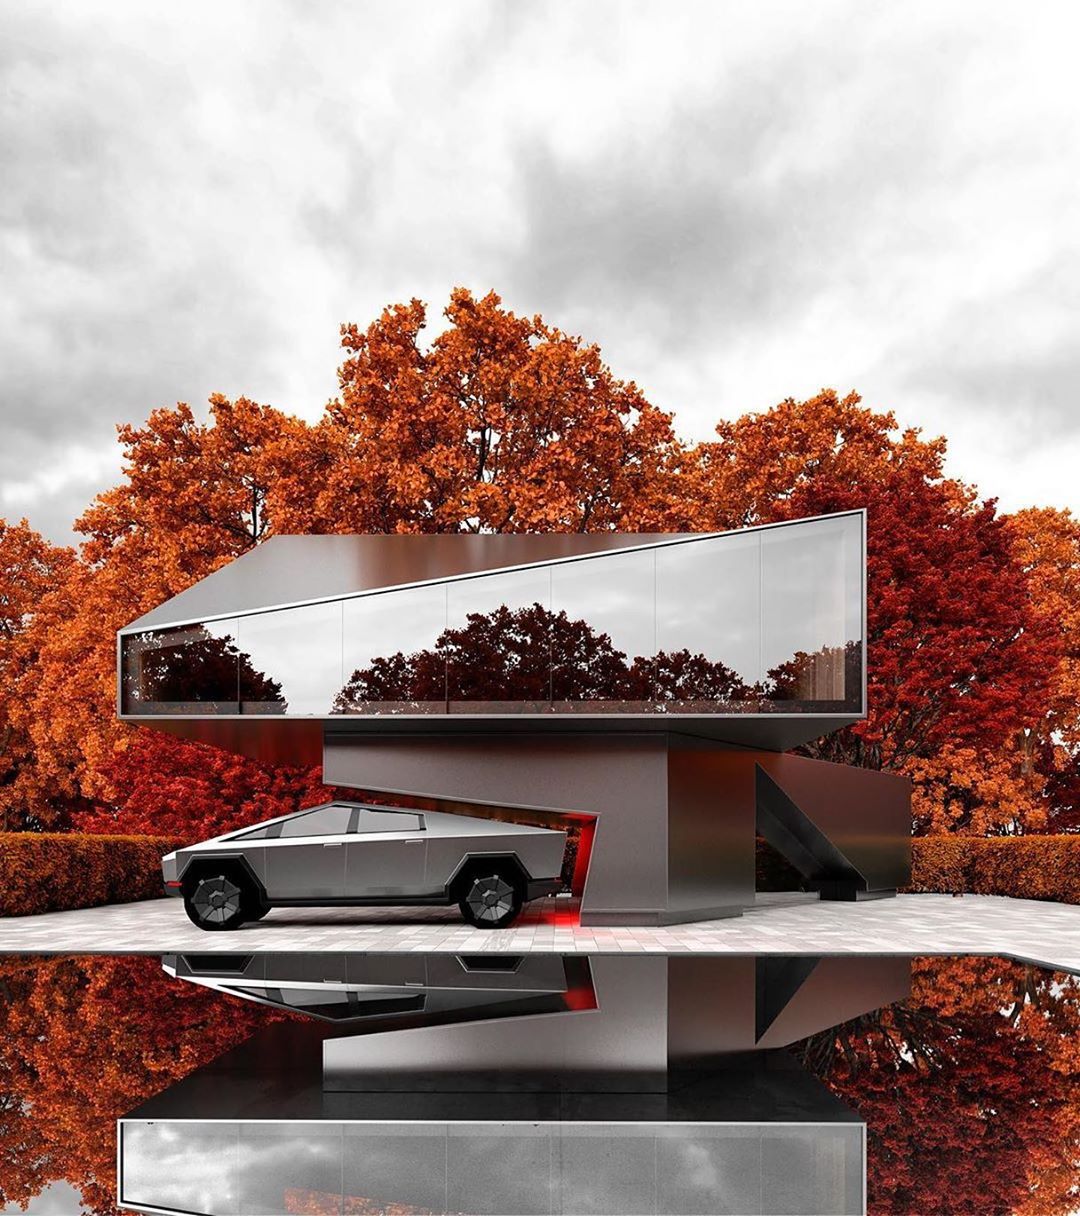 https://s1.cdn.autoevolution.com/images/news/tesla-house-concept-looks-sleek-has-cybertruck-puzzle-garage-139609_1.jpg